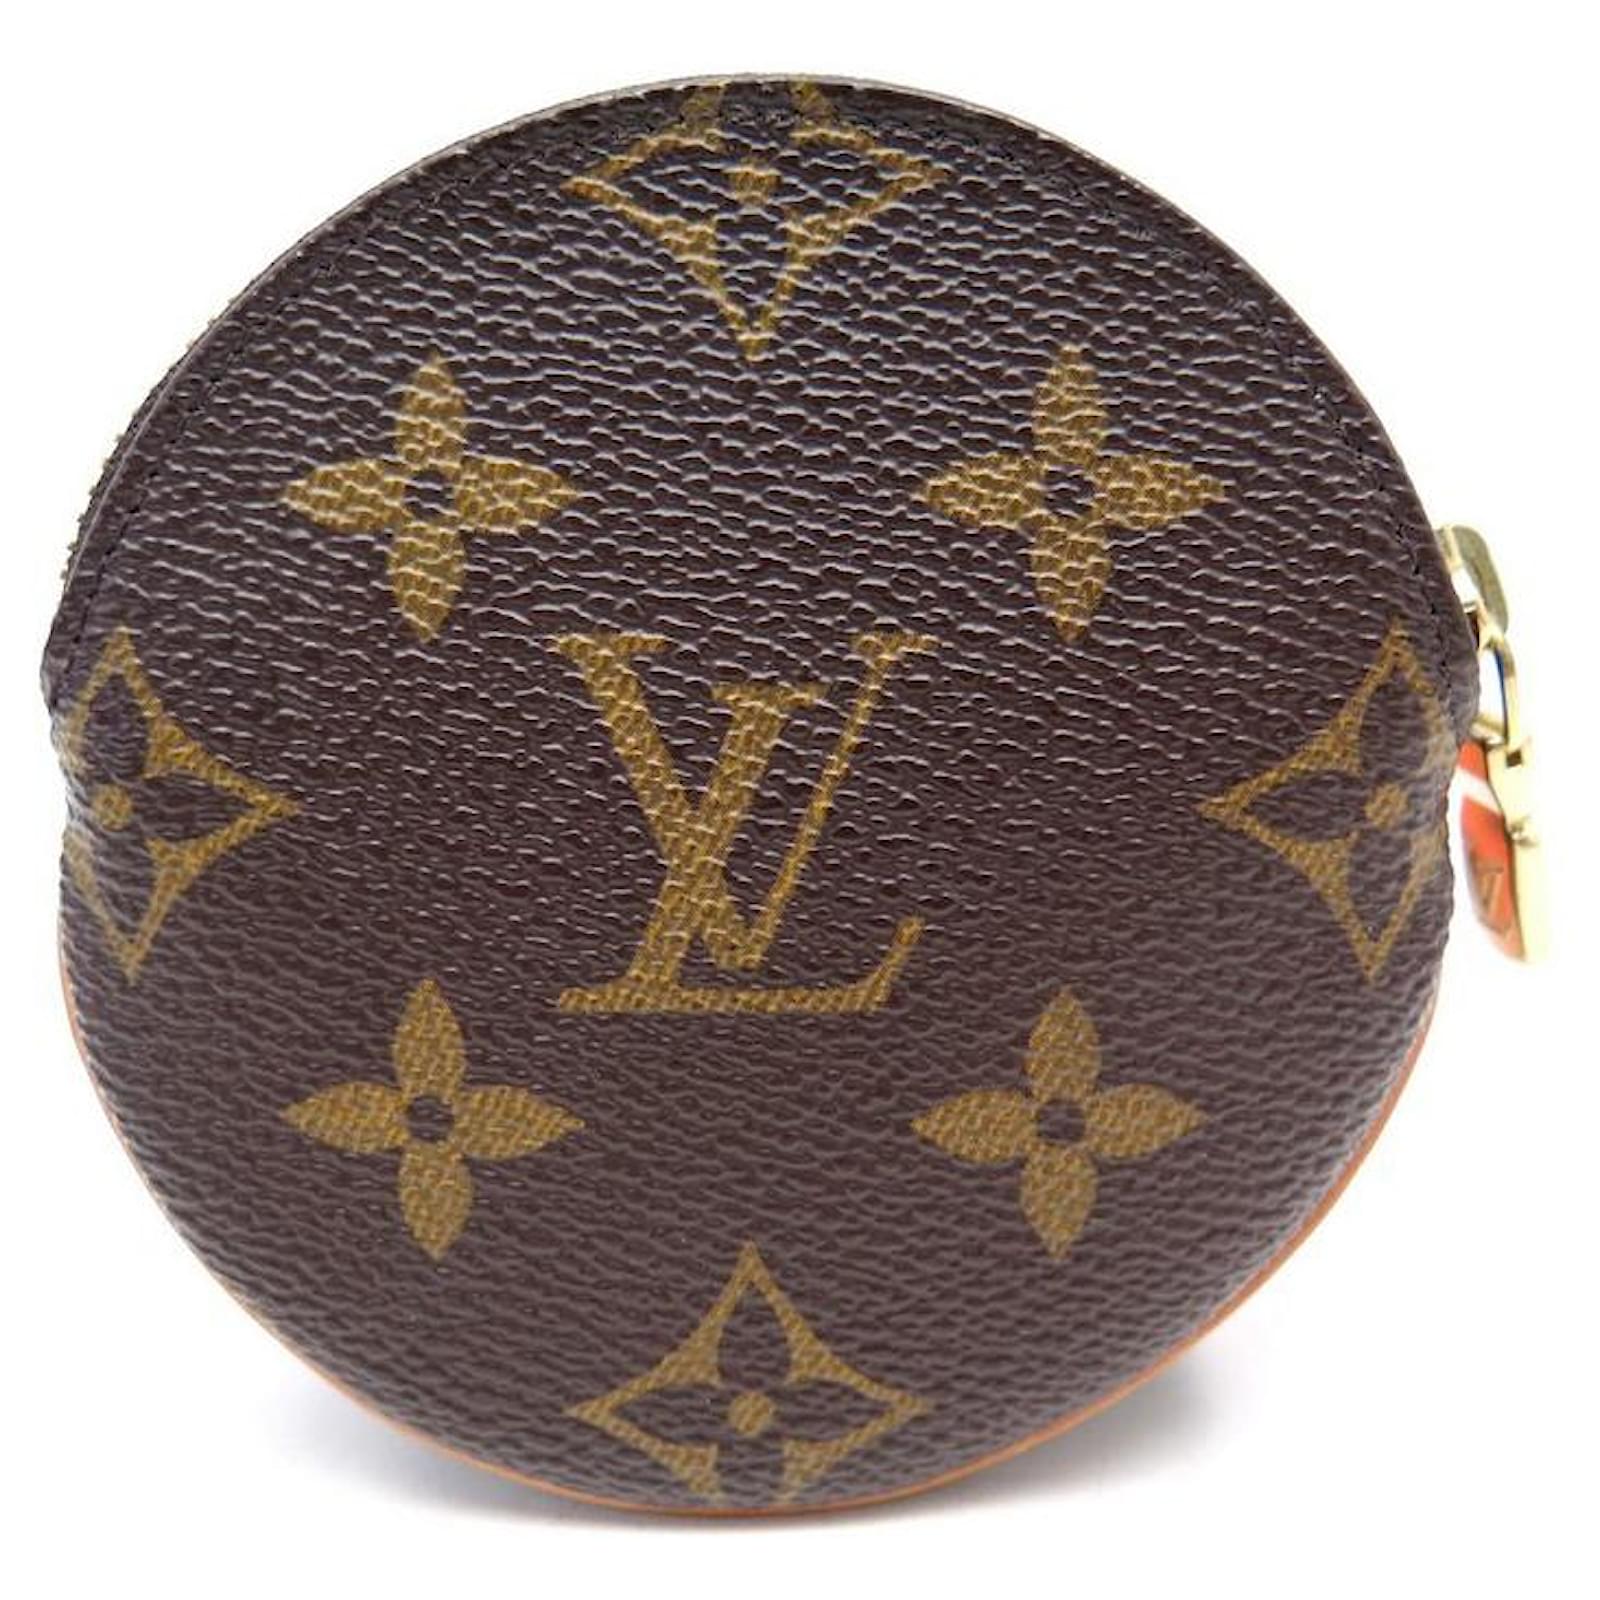 Monedero LV redondo de Louis Vuitton de segunda mano - GoTrendier